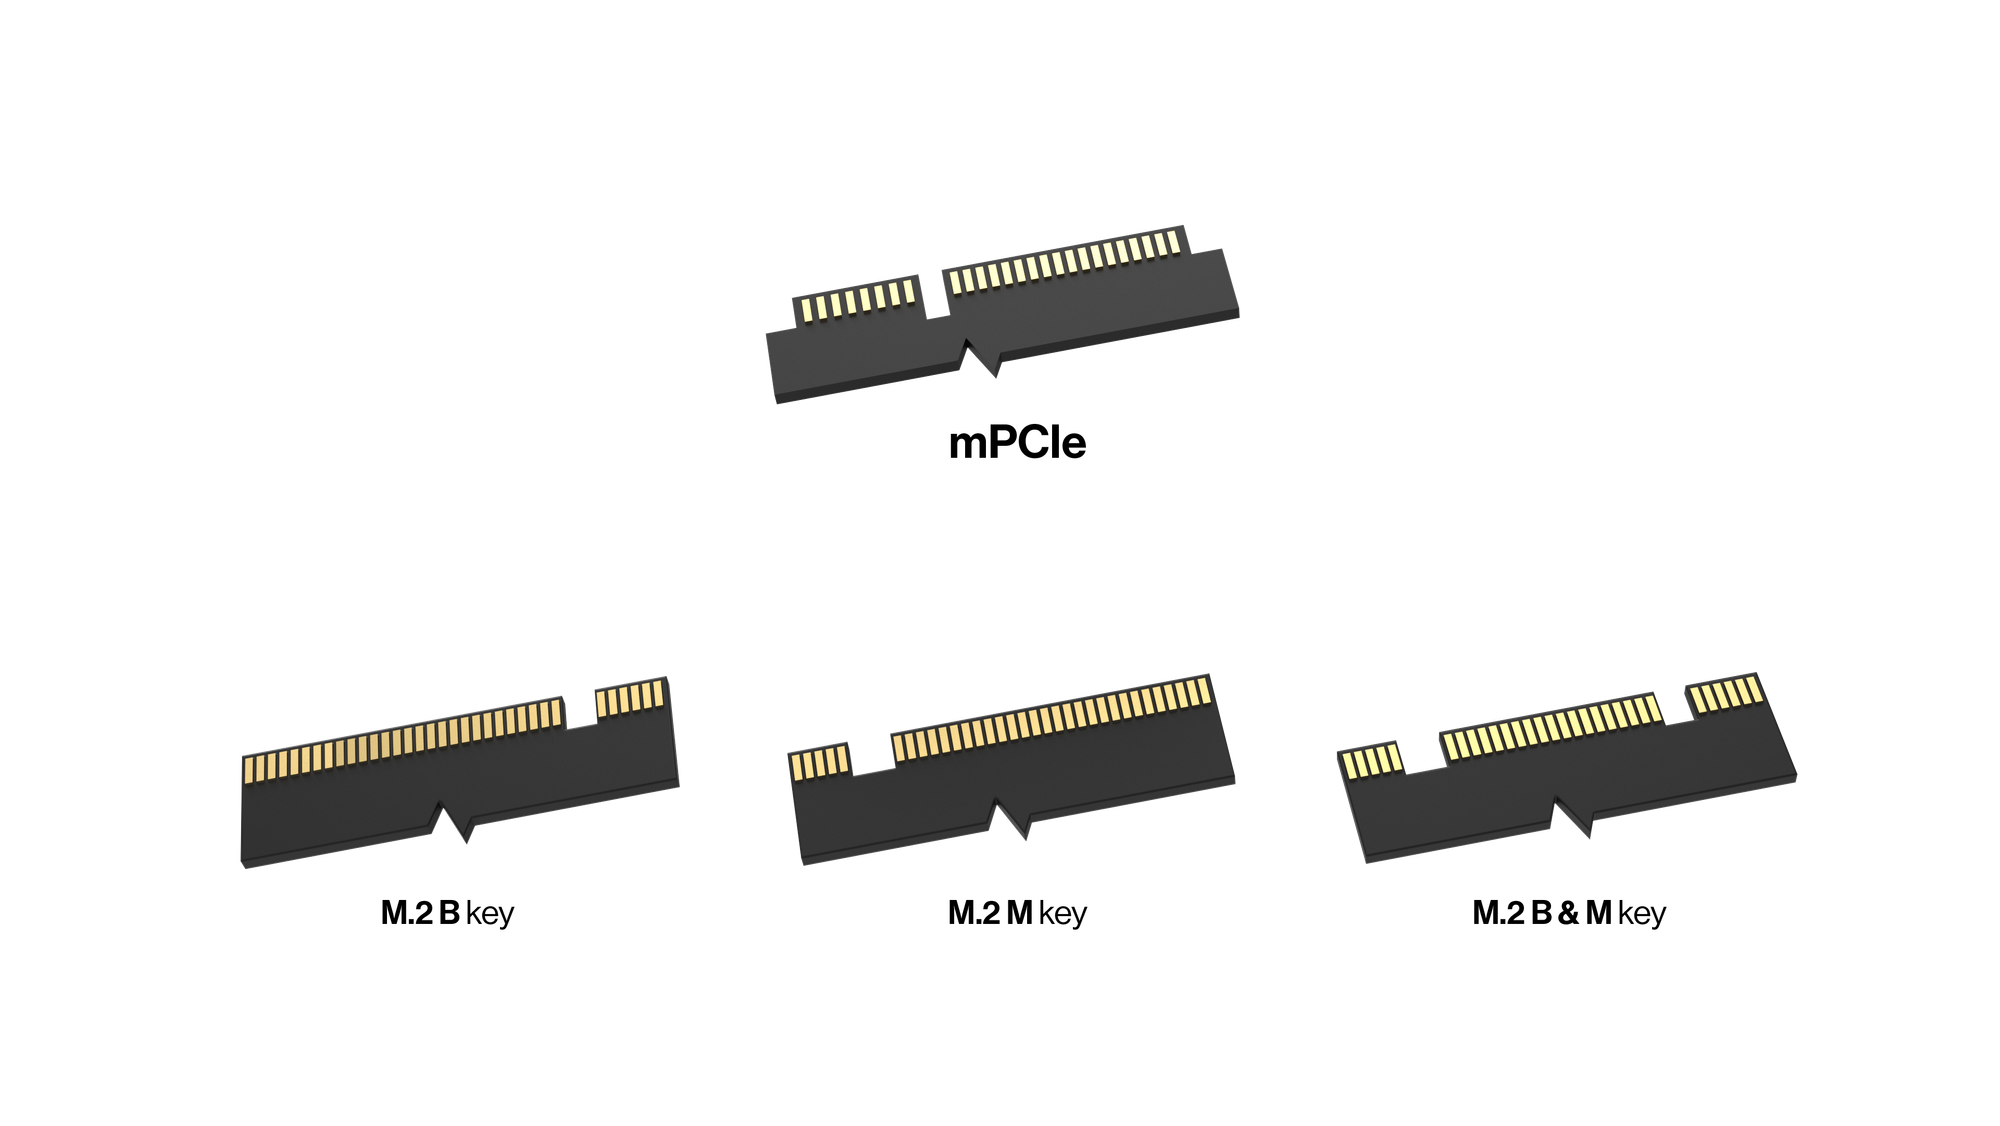 Bridging Connectivity Gaps: The WisLink M.2 Concentrator Module for LoRaWAN® (RAK5166/RAK5167)